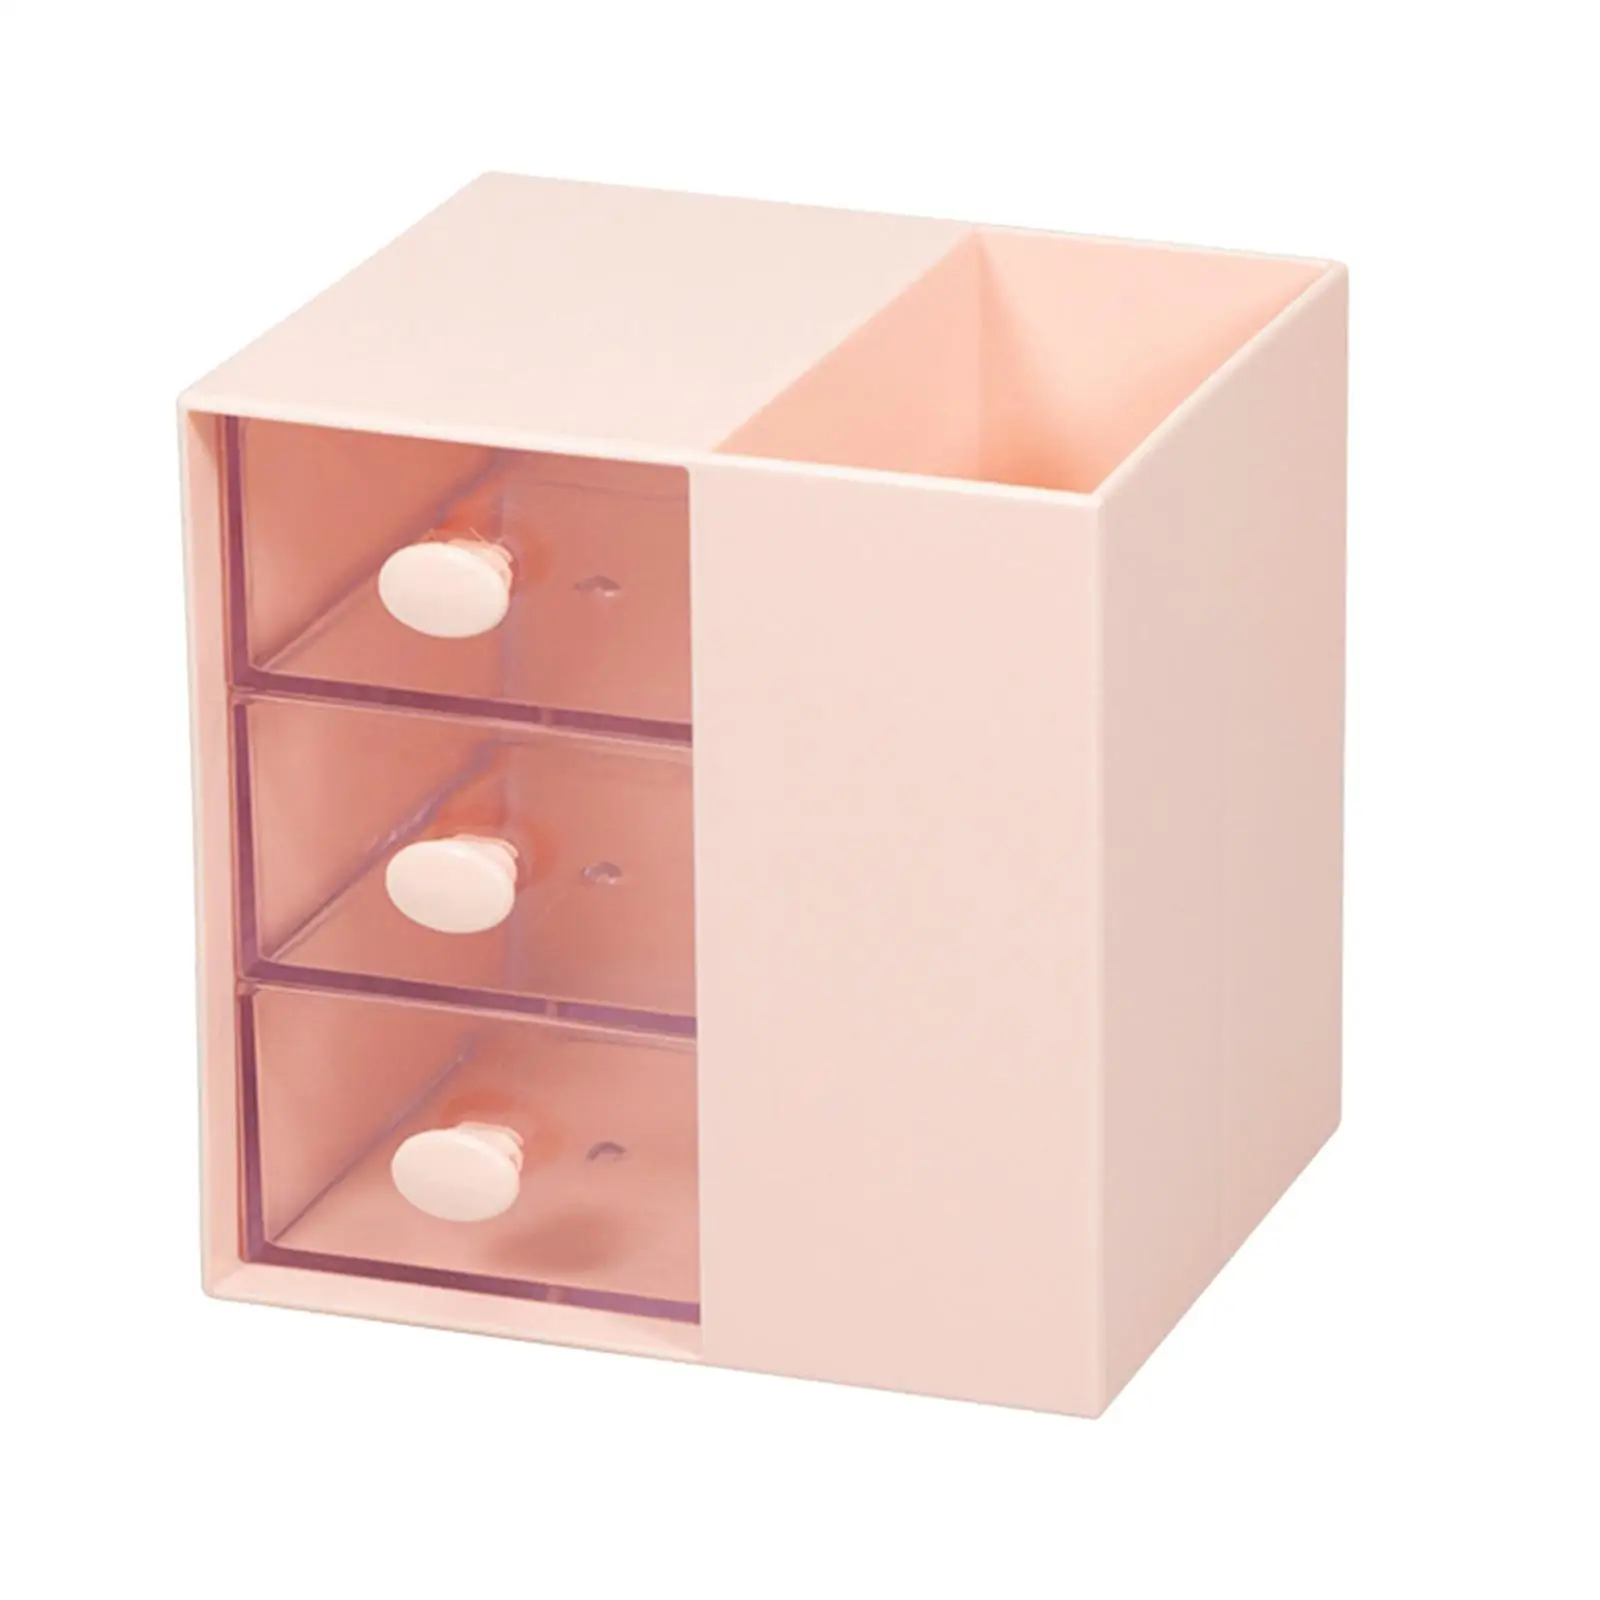 Vanity Organizer Pencil Storage Box with 4 Compartments ,5x4x13inch Bathroom, Counter, Dresser Organization